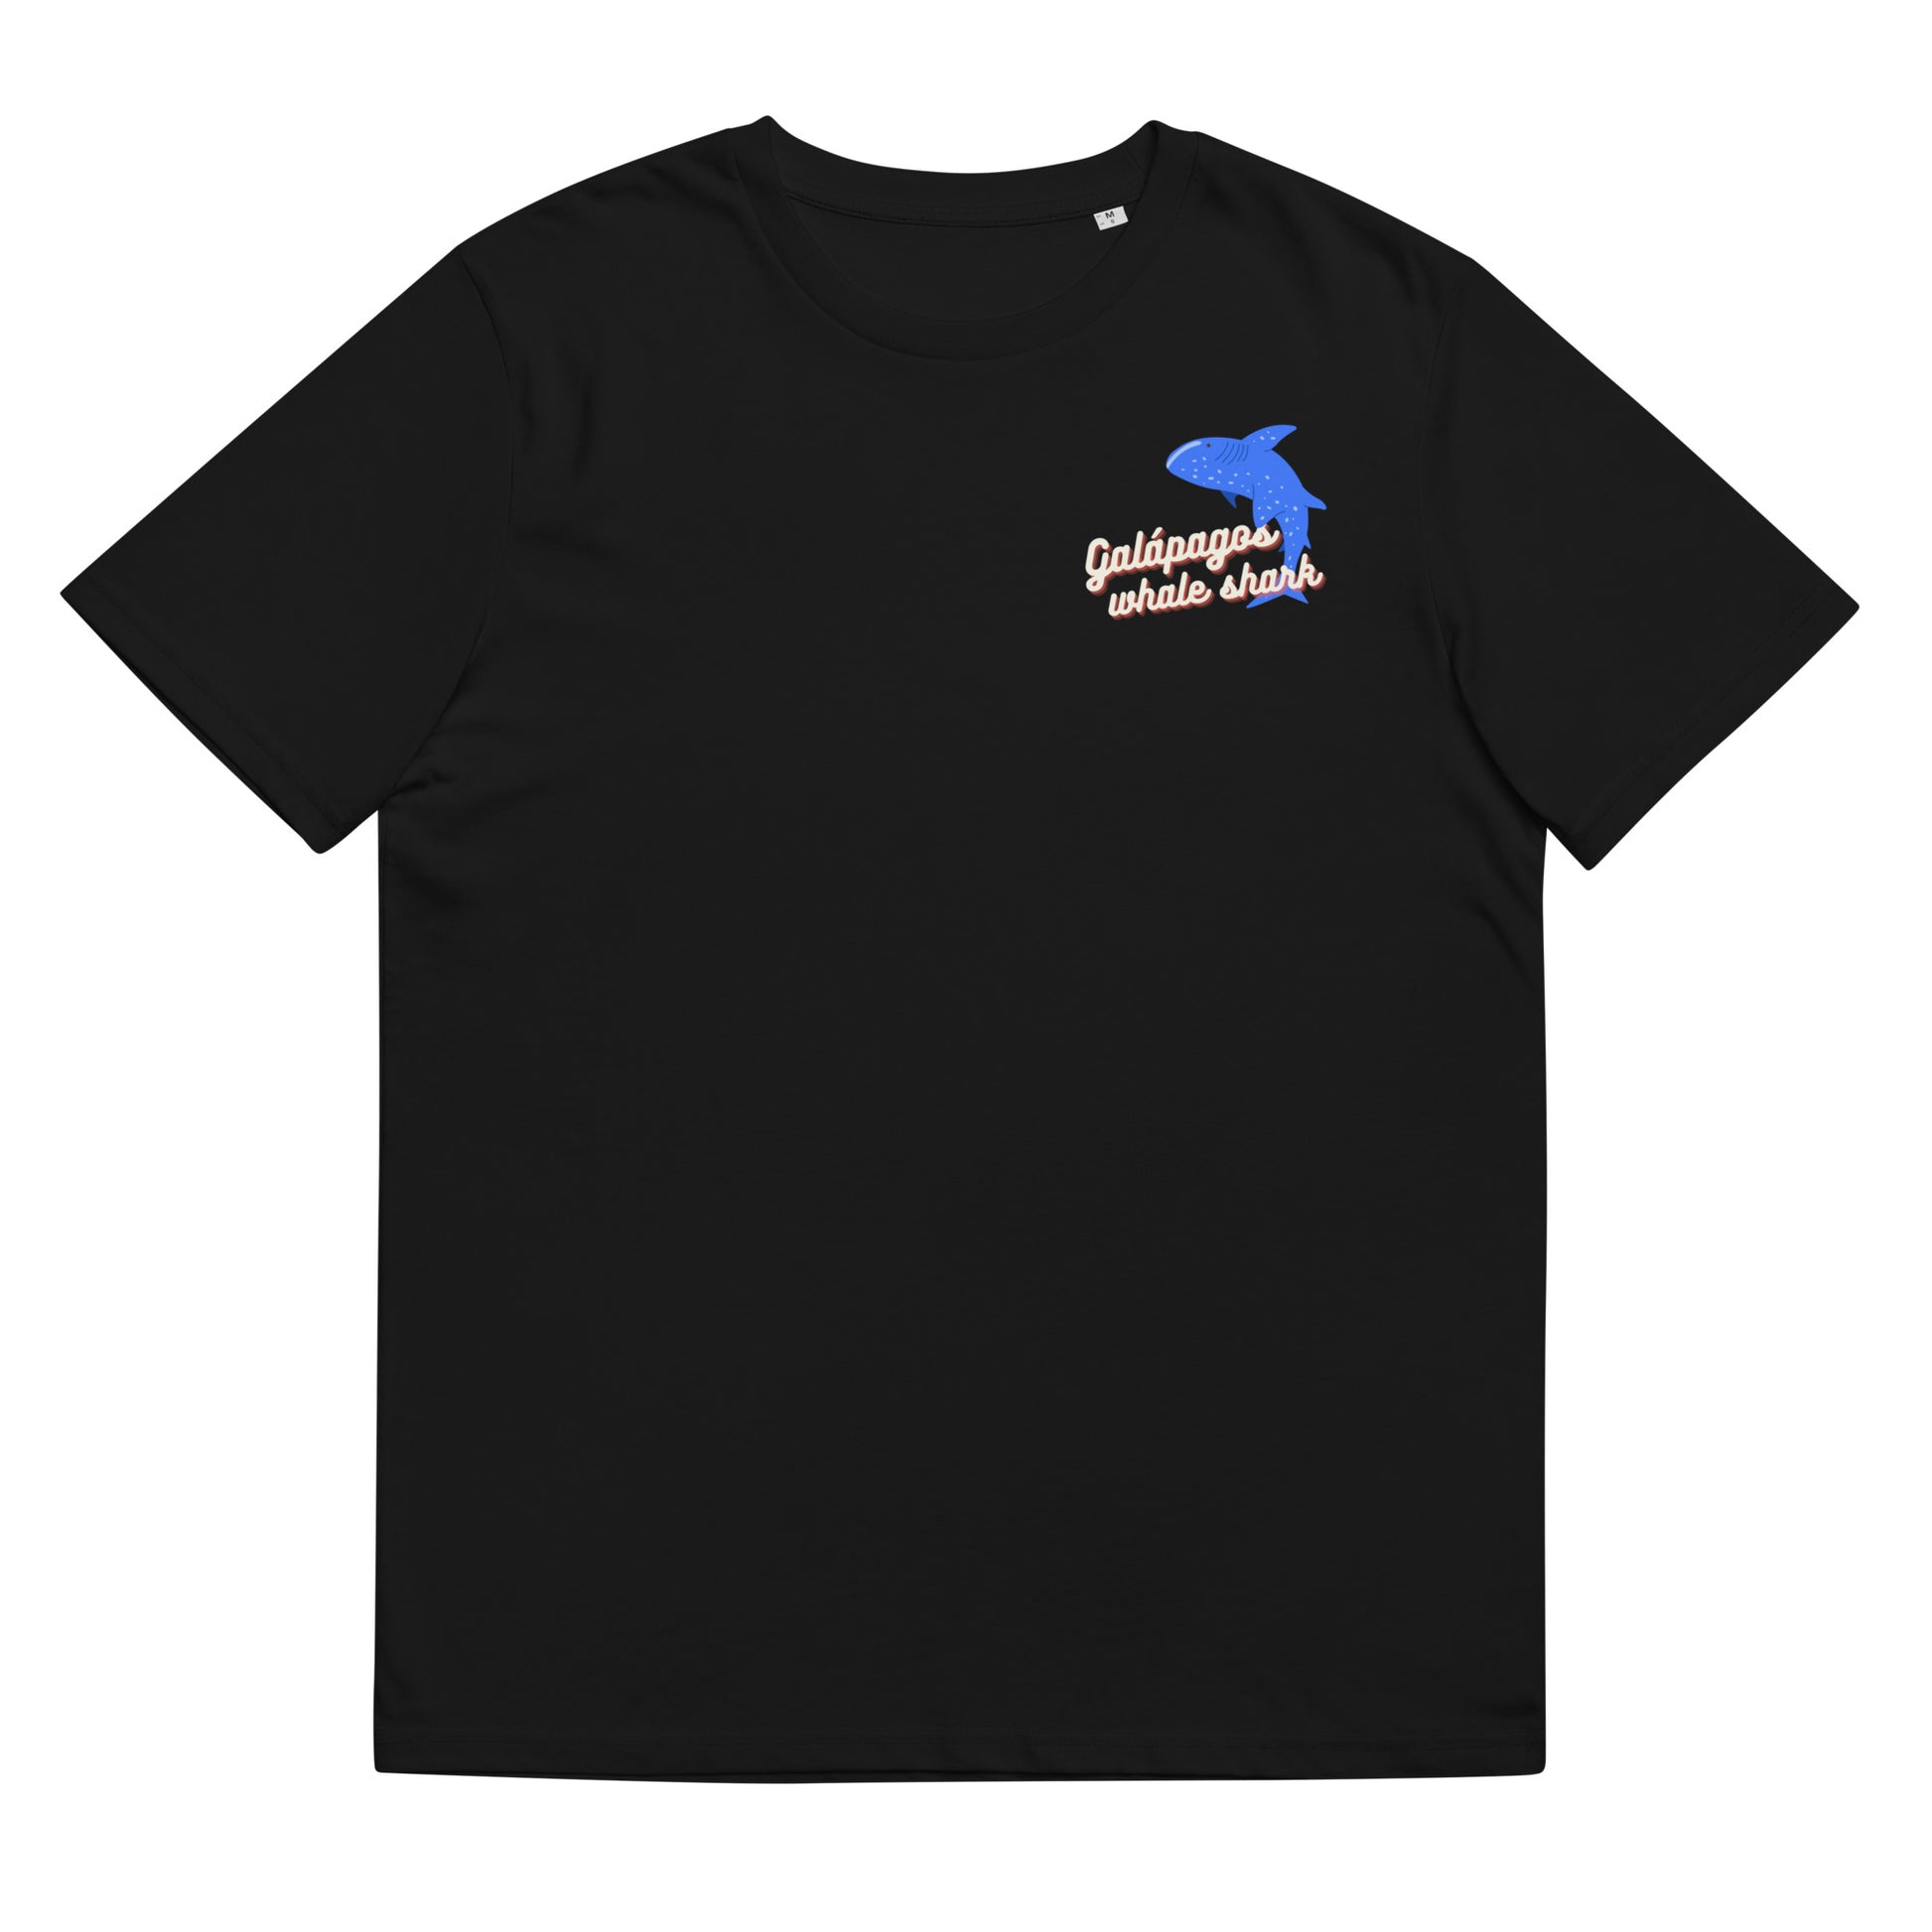 Galapagos whale shark t-shirt